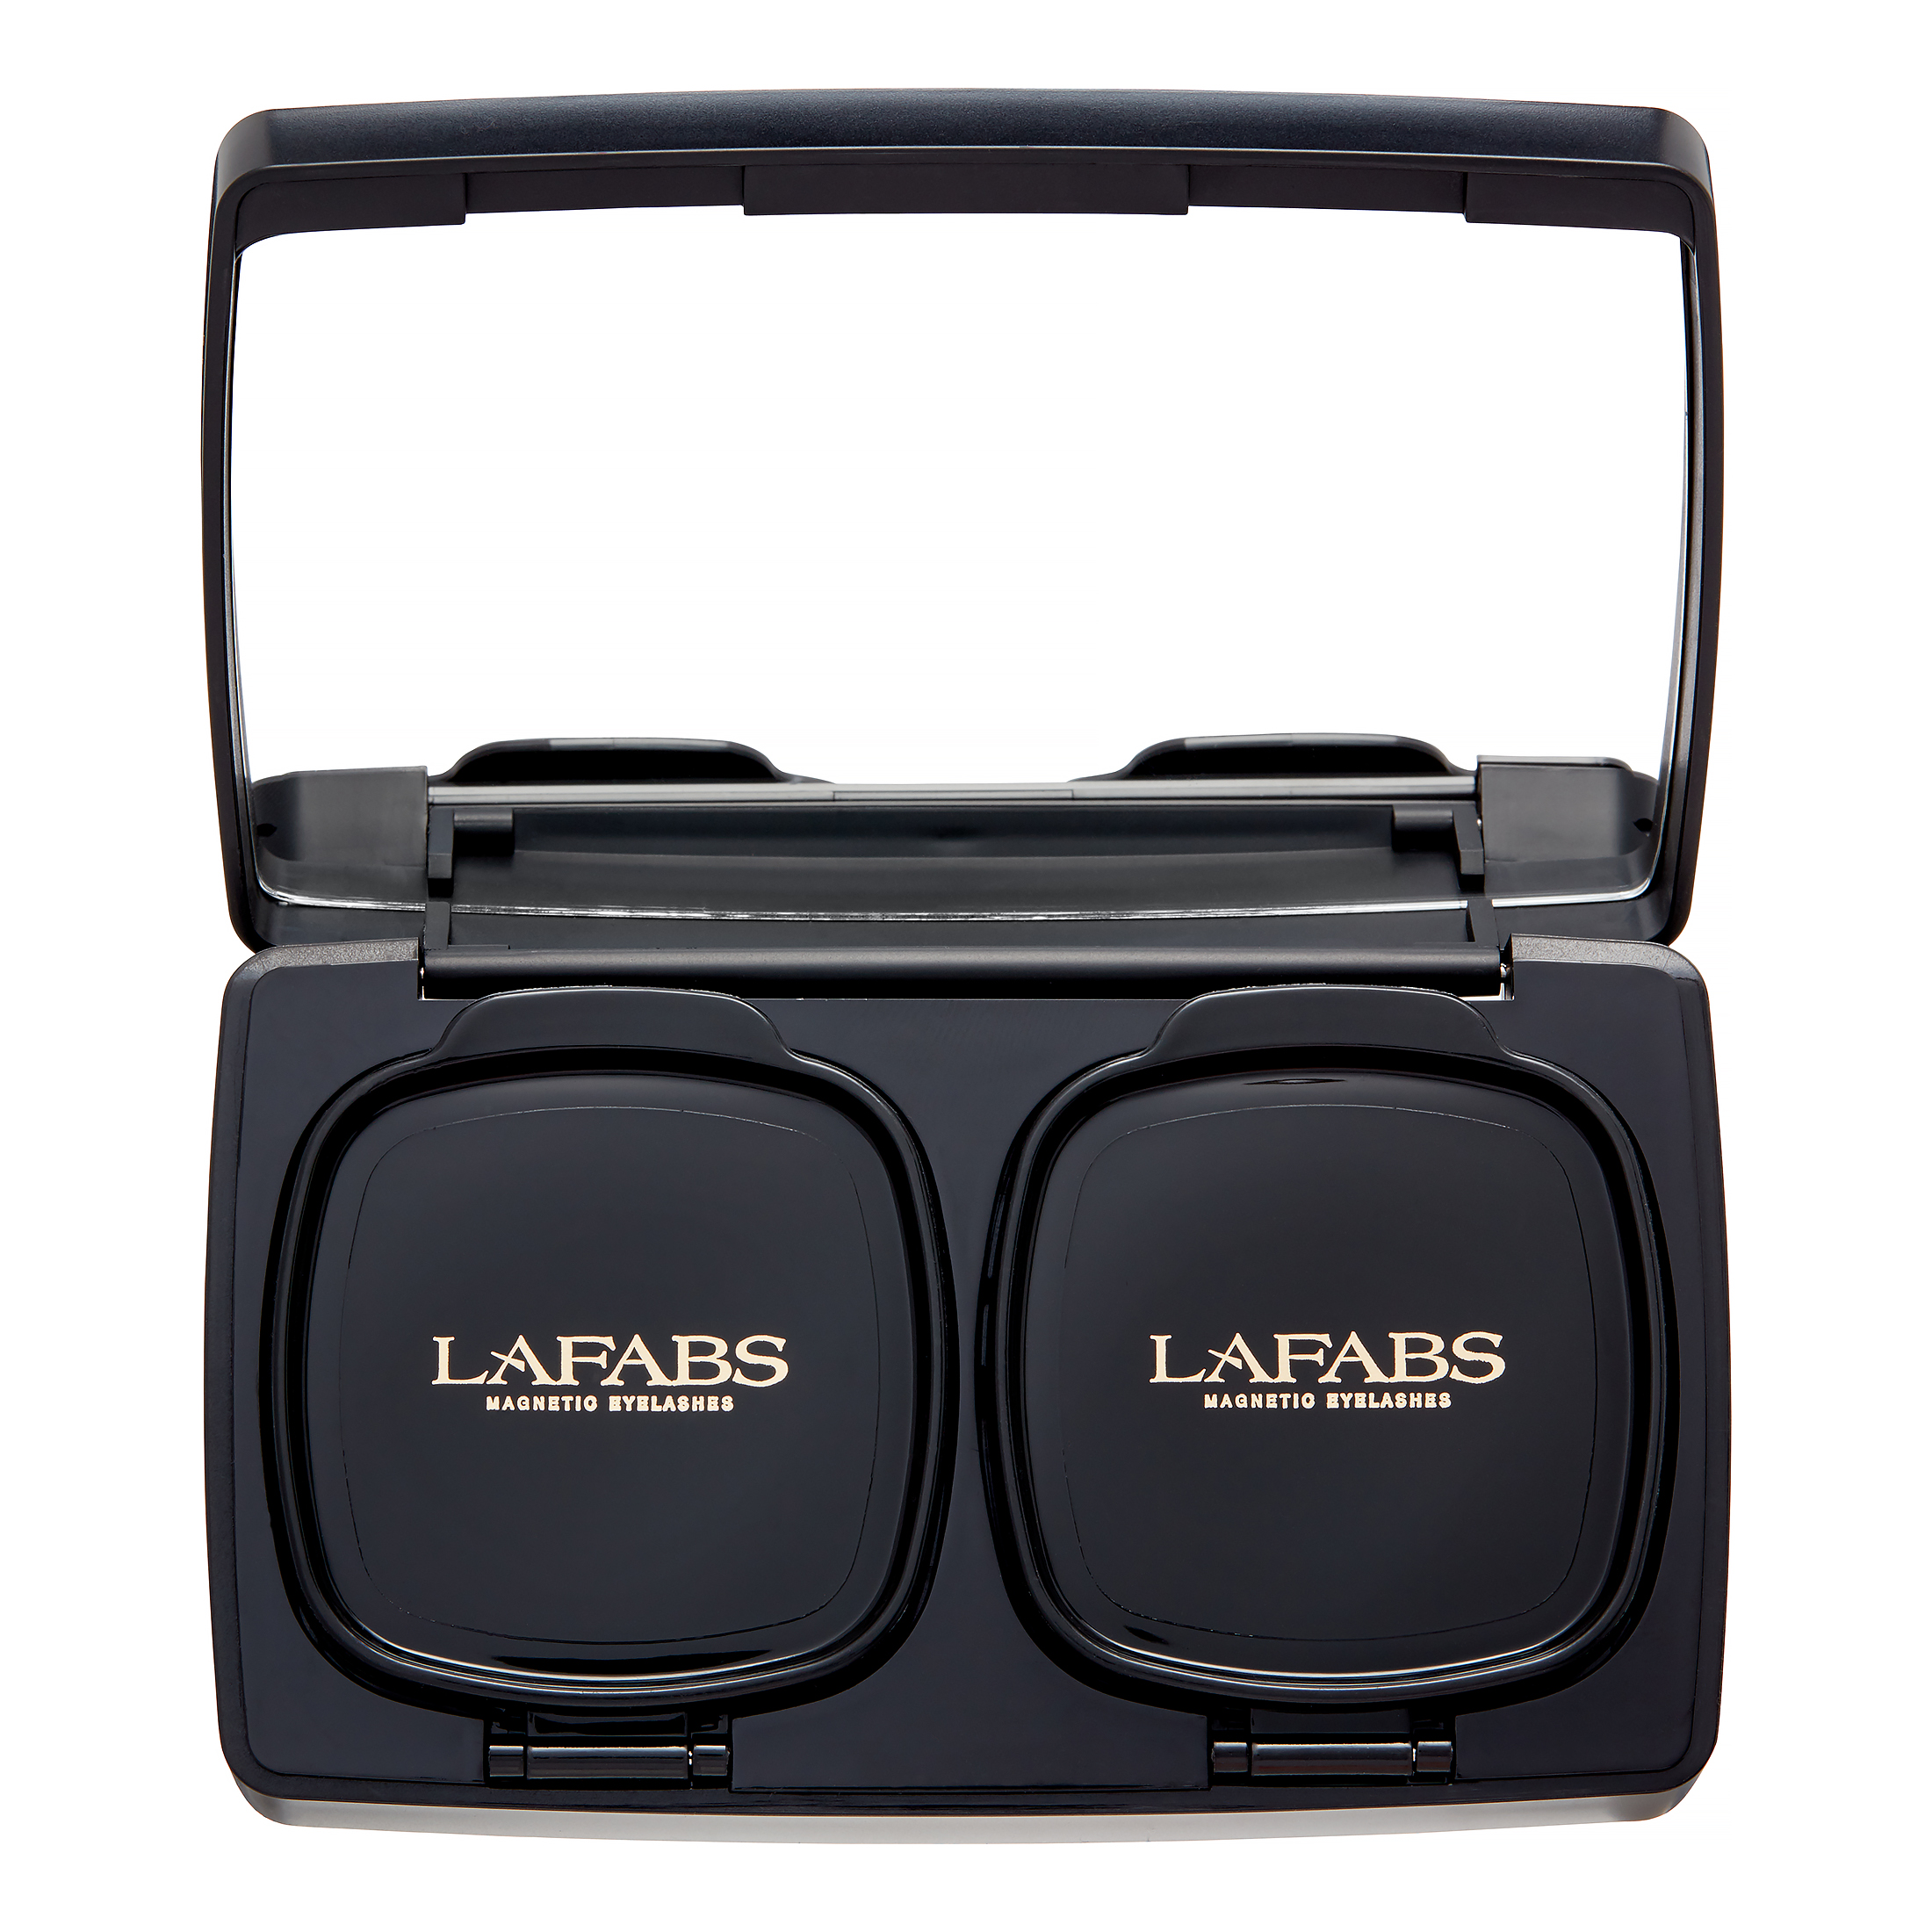 LaFabs Premium Magnetic Eyelash Set, 2 Pairs - image 5 of 11